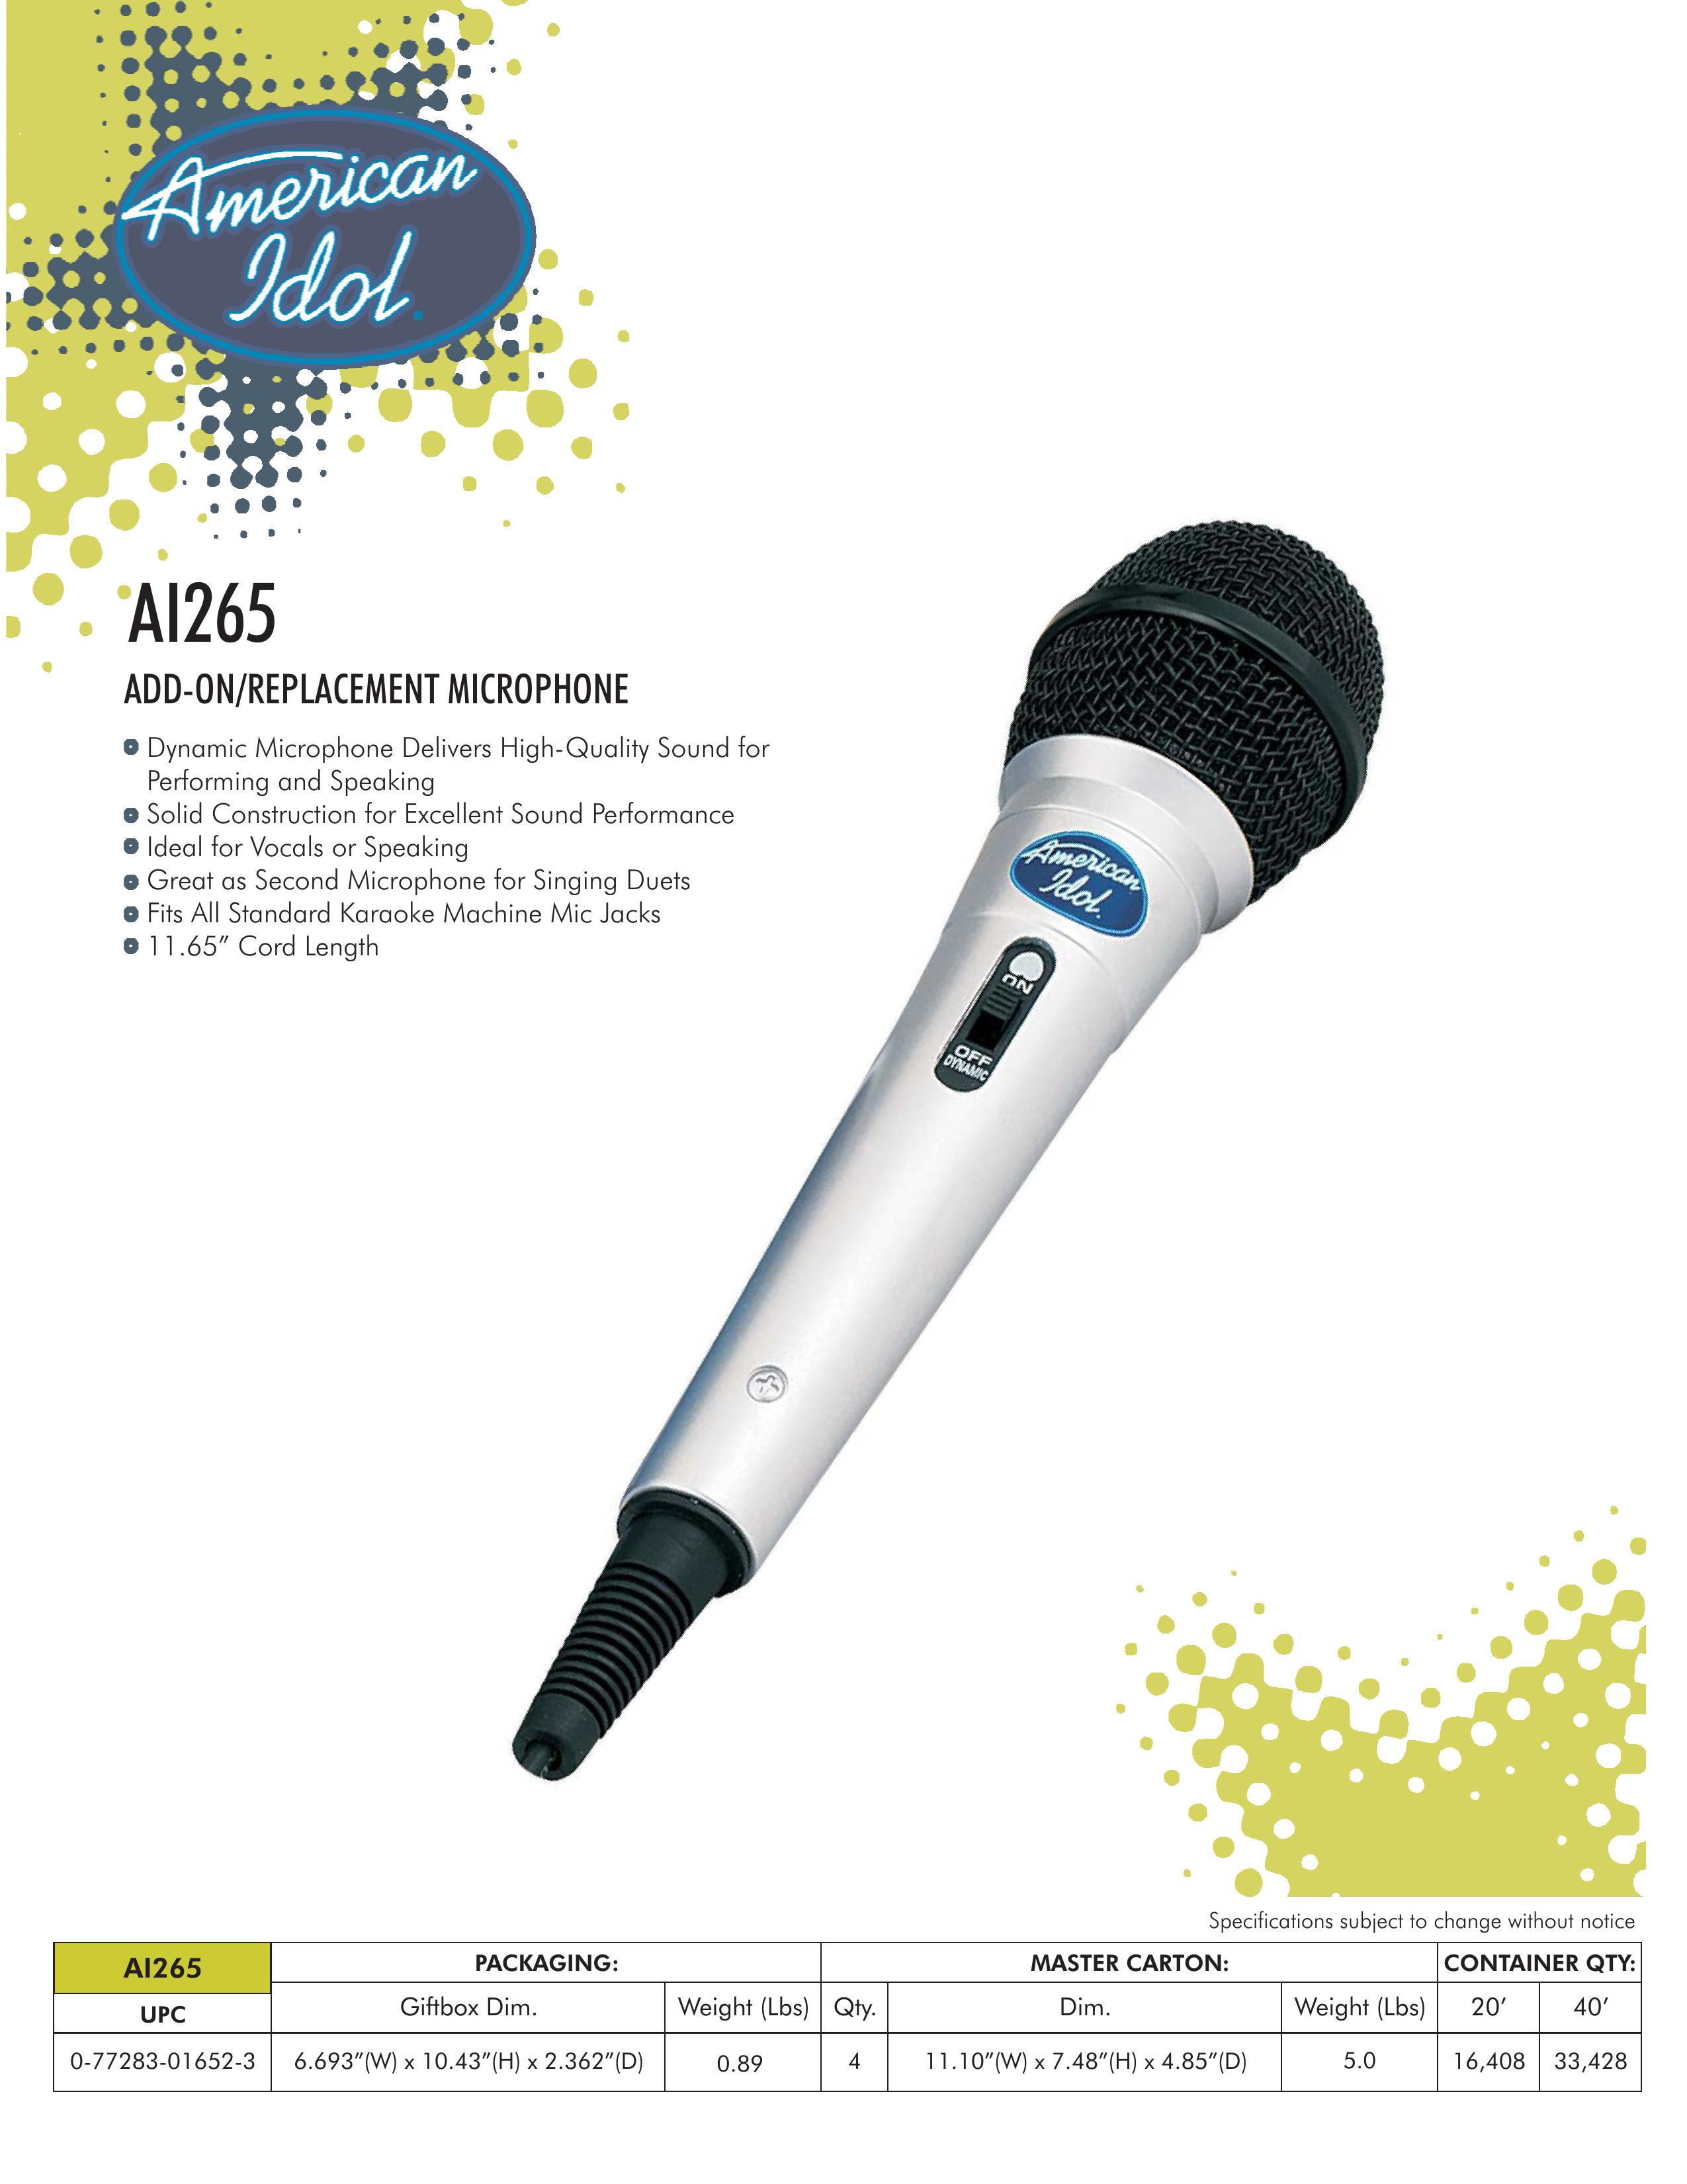 Spectra AI265 Microphone User Manual